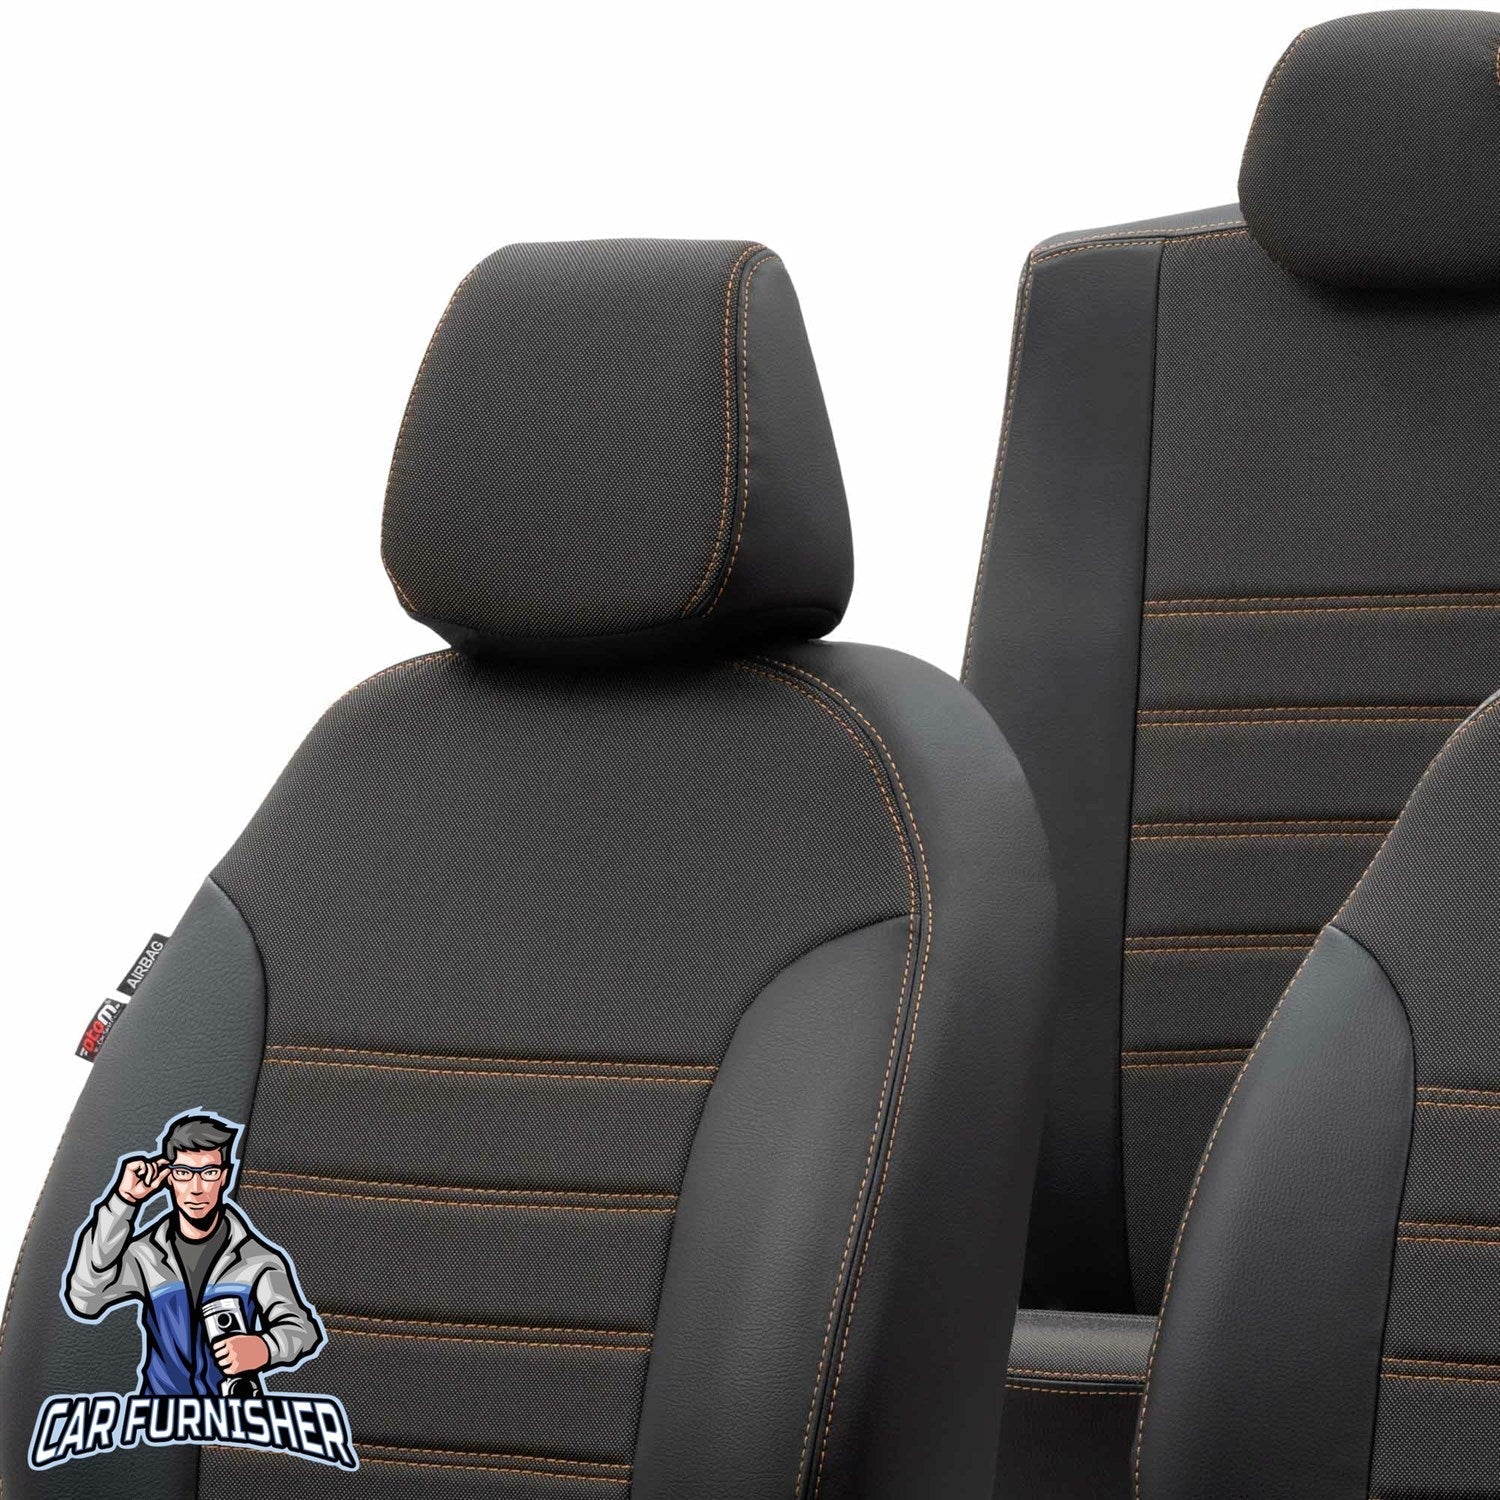 Fiat Doblo Seat Covers Paris Leather & Jacquard Design Dark Beige Leather & Jacquard Fabric